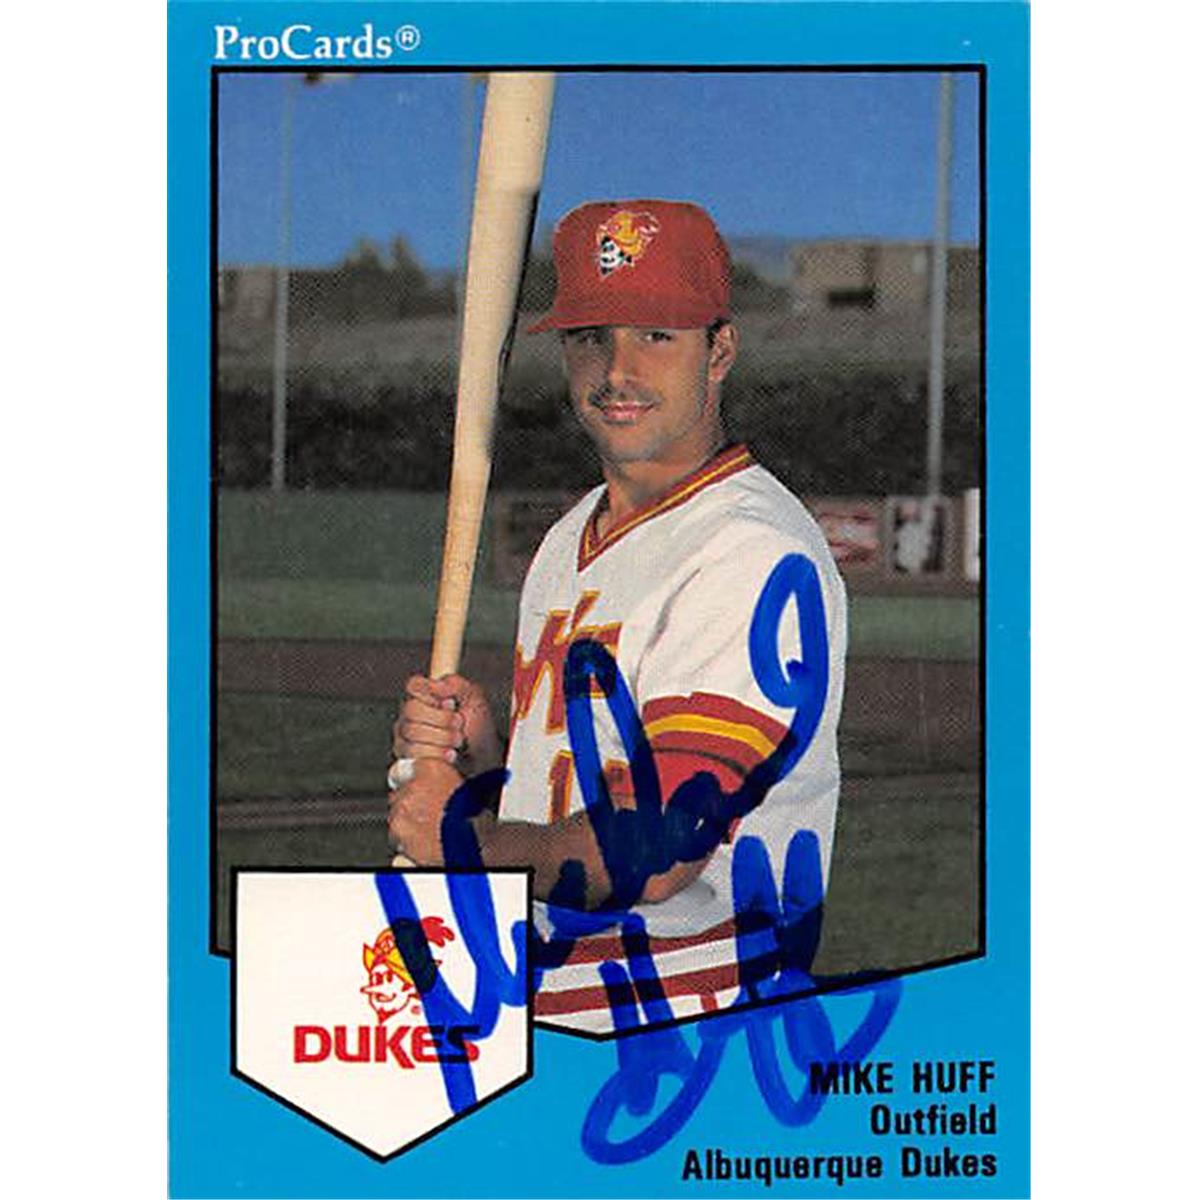 344317 Mike Huff Autographed Baseball Card - Albuquerque Dukes 1989 ProCards No. 79 Minor League Rookie -  Autograph Warehouse